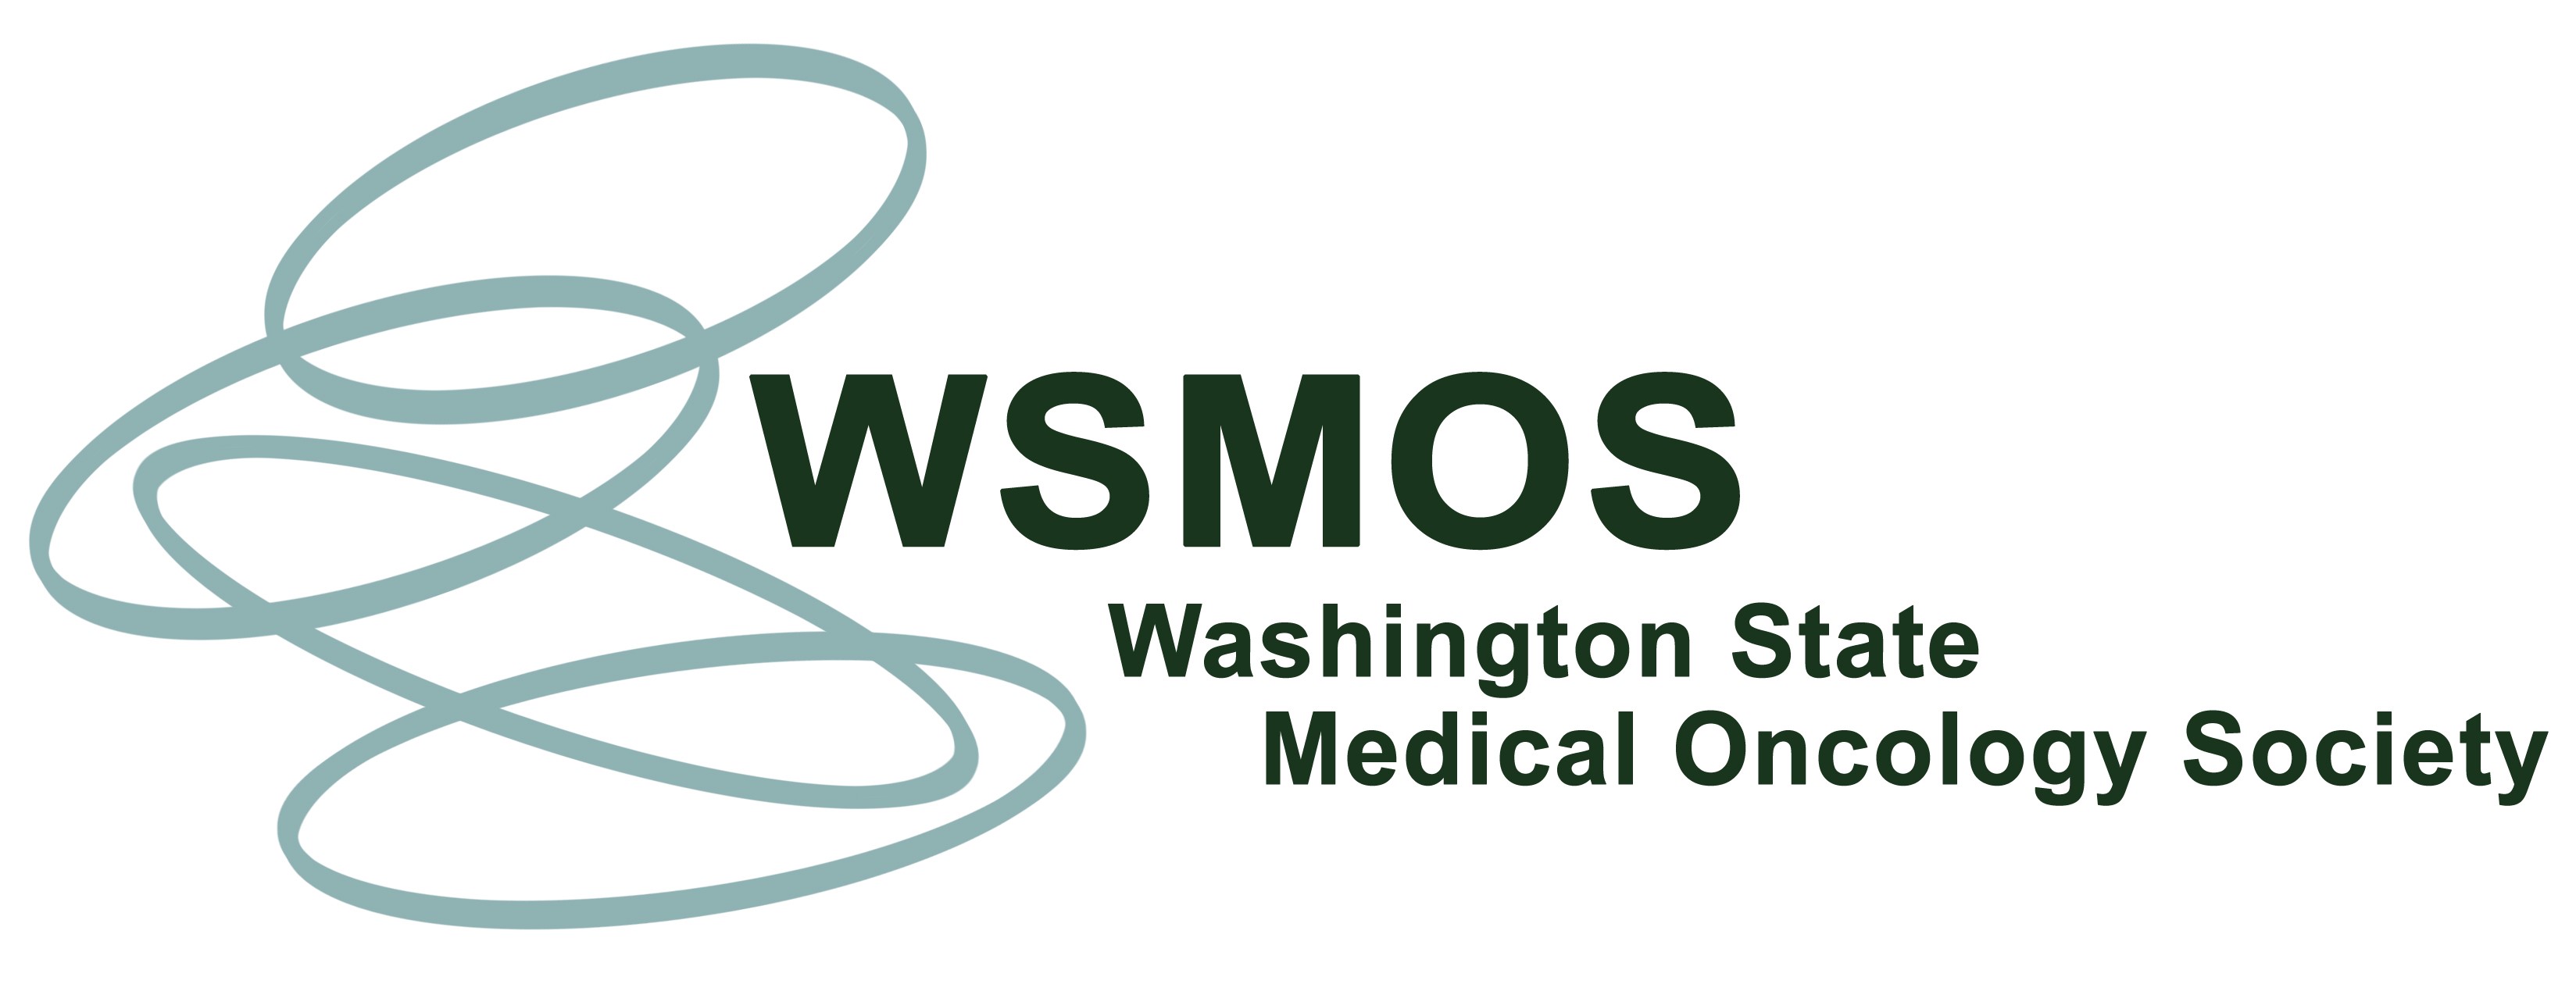 Washington State Medical Oncology Society